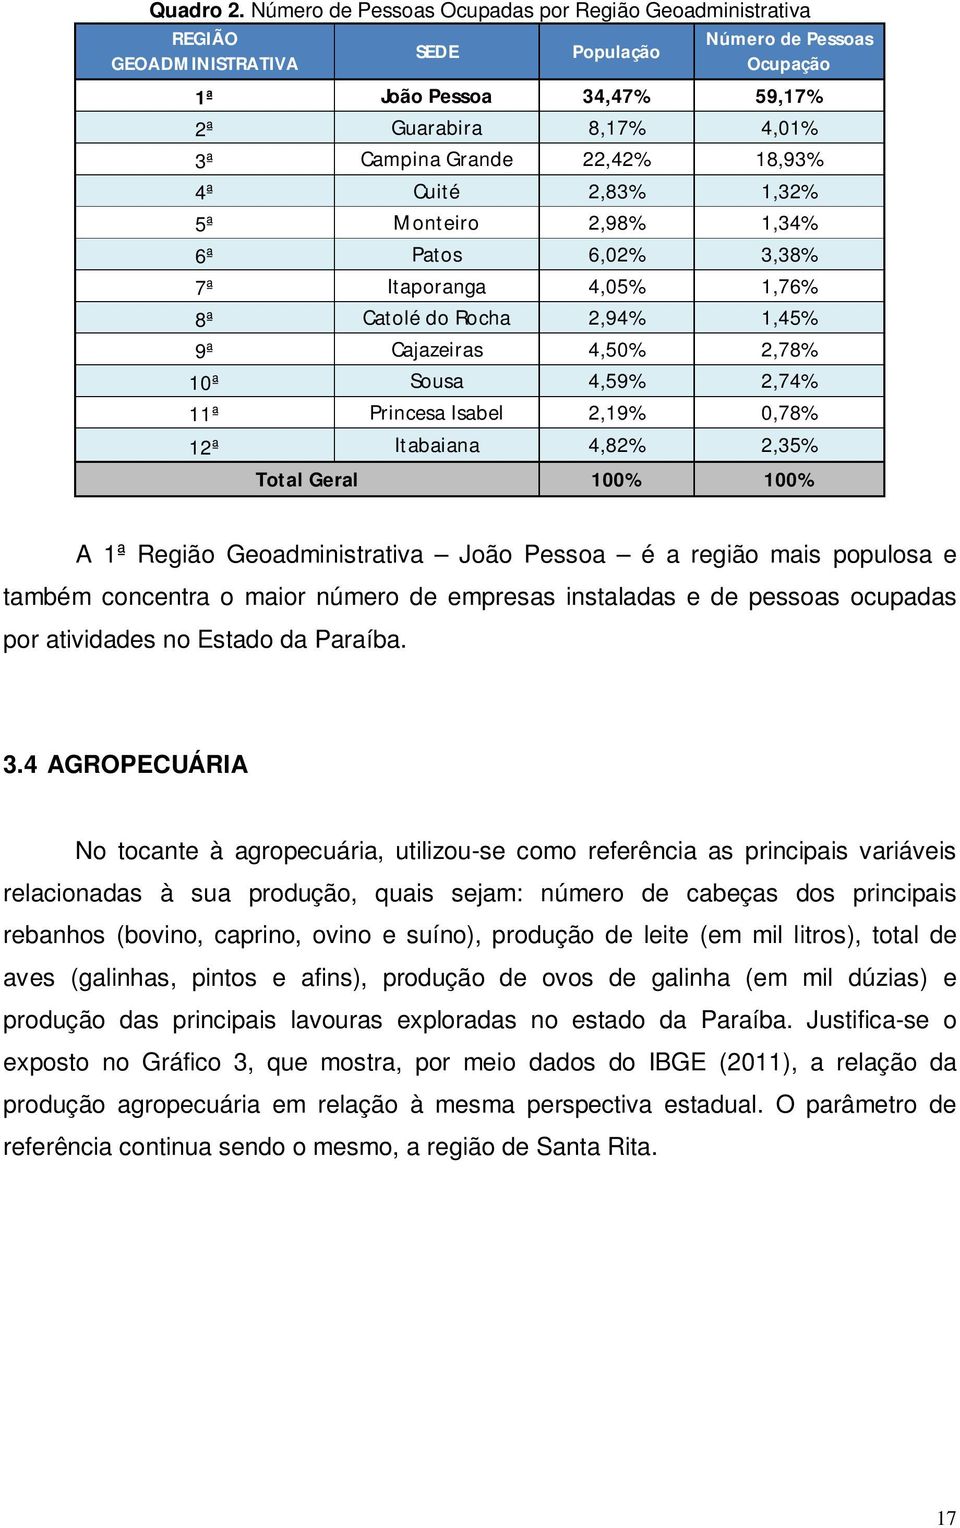 22,42% 18,93% 4ª Cuité 2,83% 1,32% 5ª Monteiro 2,98% 1,34% 6ª Patos 6,02% 3,38% 7ª Itaporanga 4,05% 1,76% 8ª Catolé do Rocha 2,94% 1,45% 9ª Cajazeiras 4,50% 2,78% 10ª Sousa 4,59% 2,74% 11ª Princesa